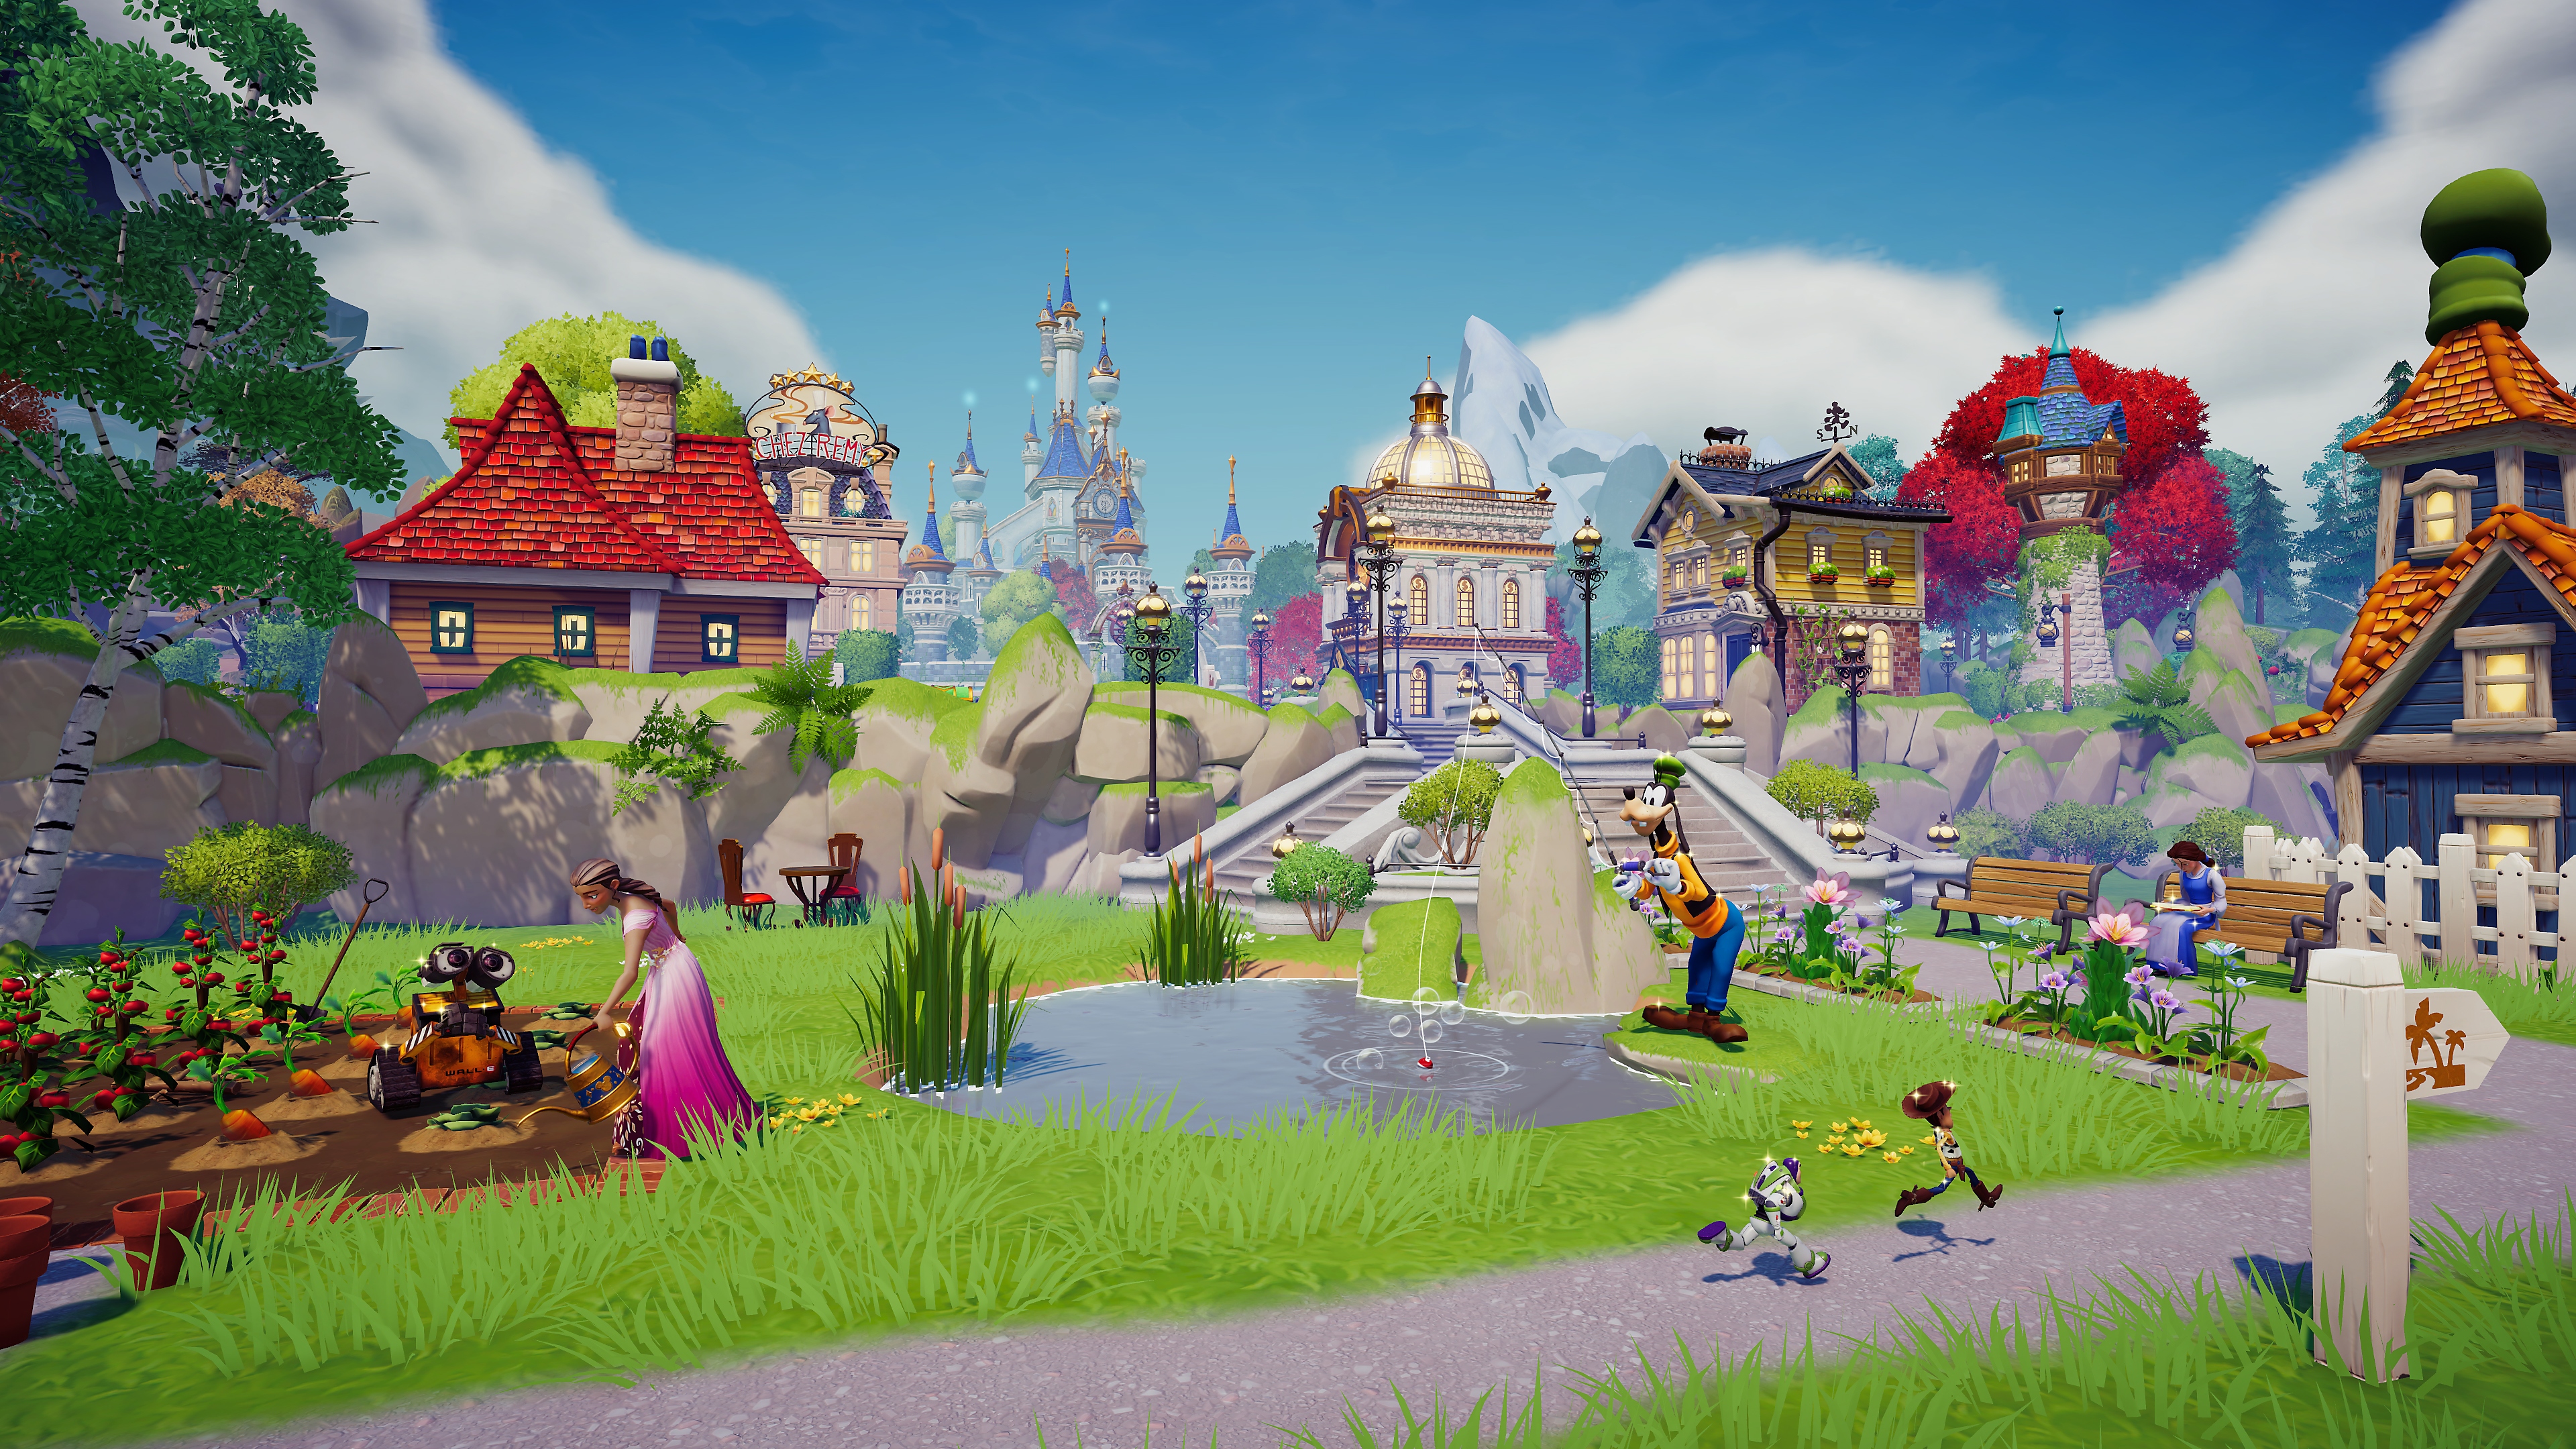 Disney Dreamlight Valley screenshot showing a village scene